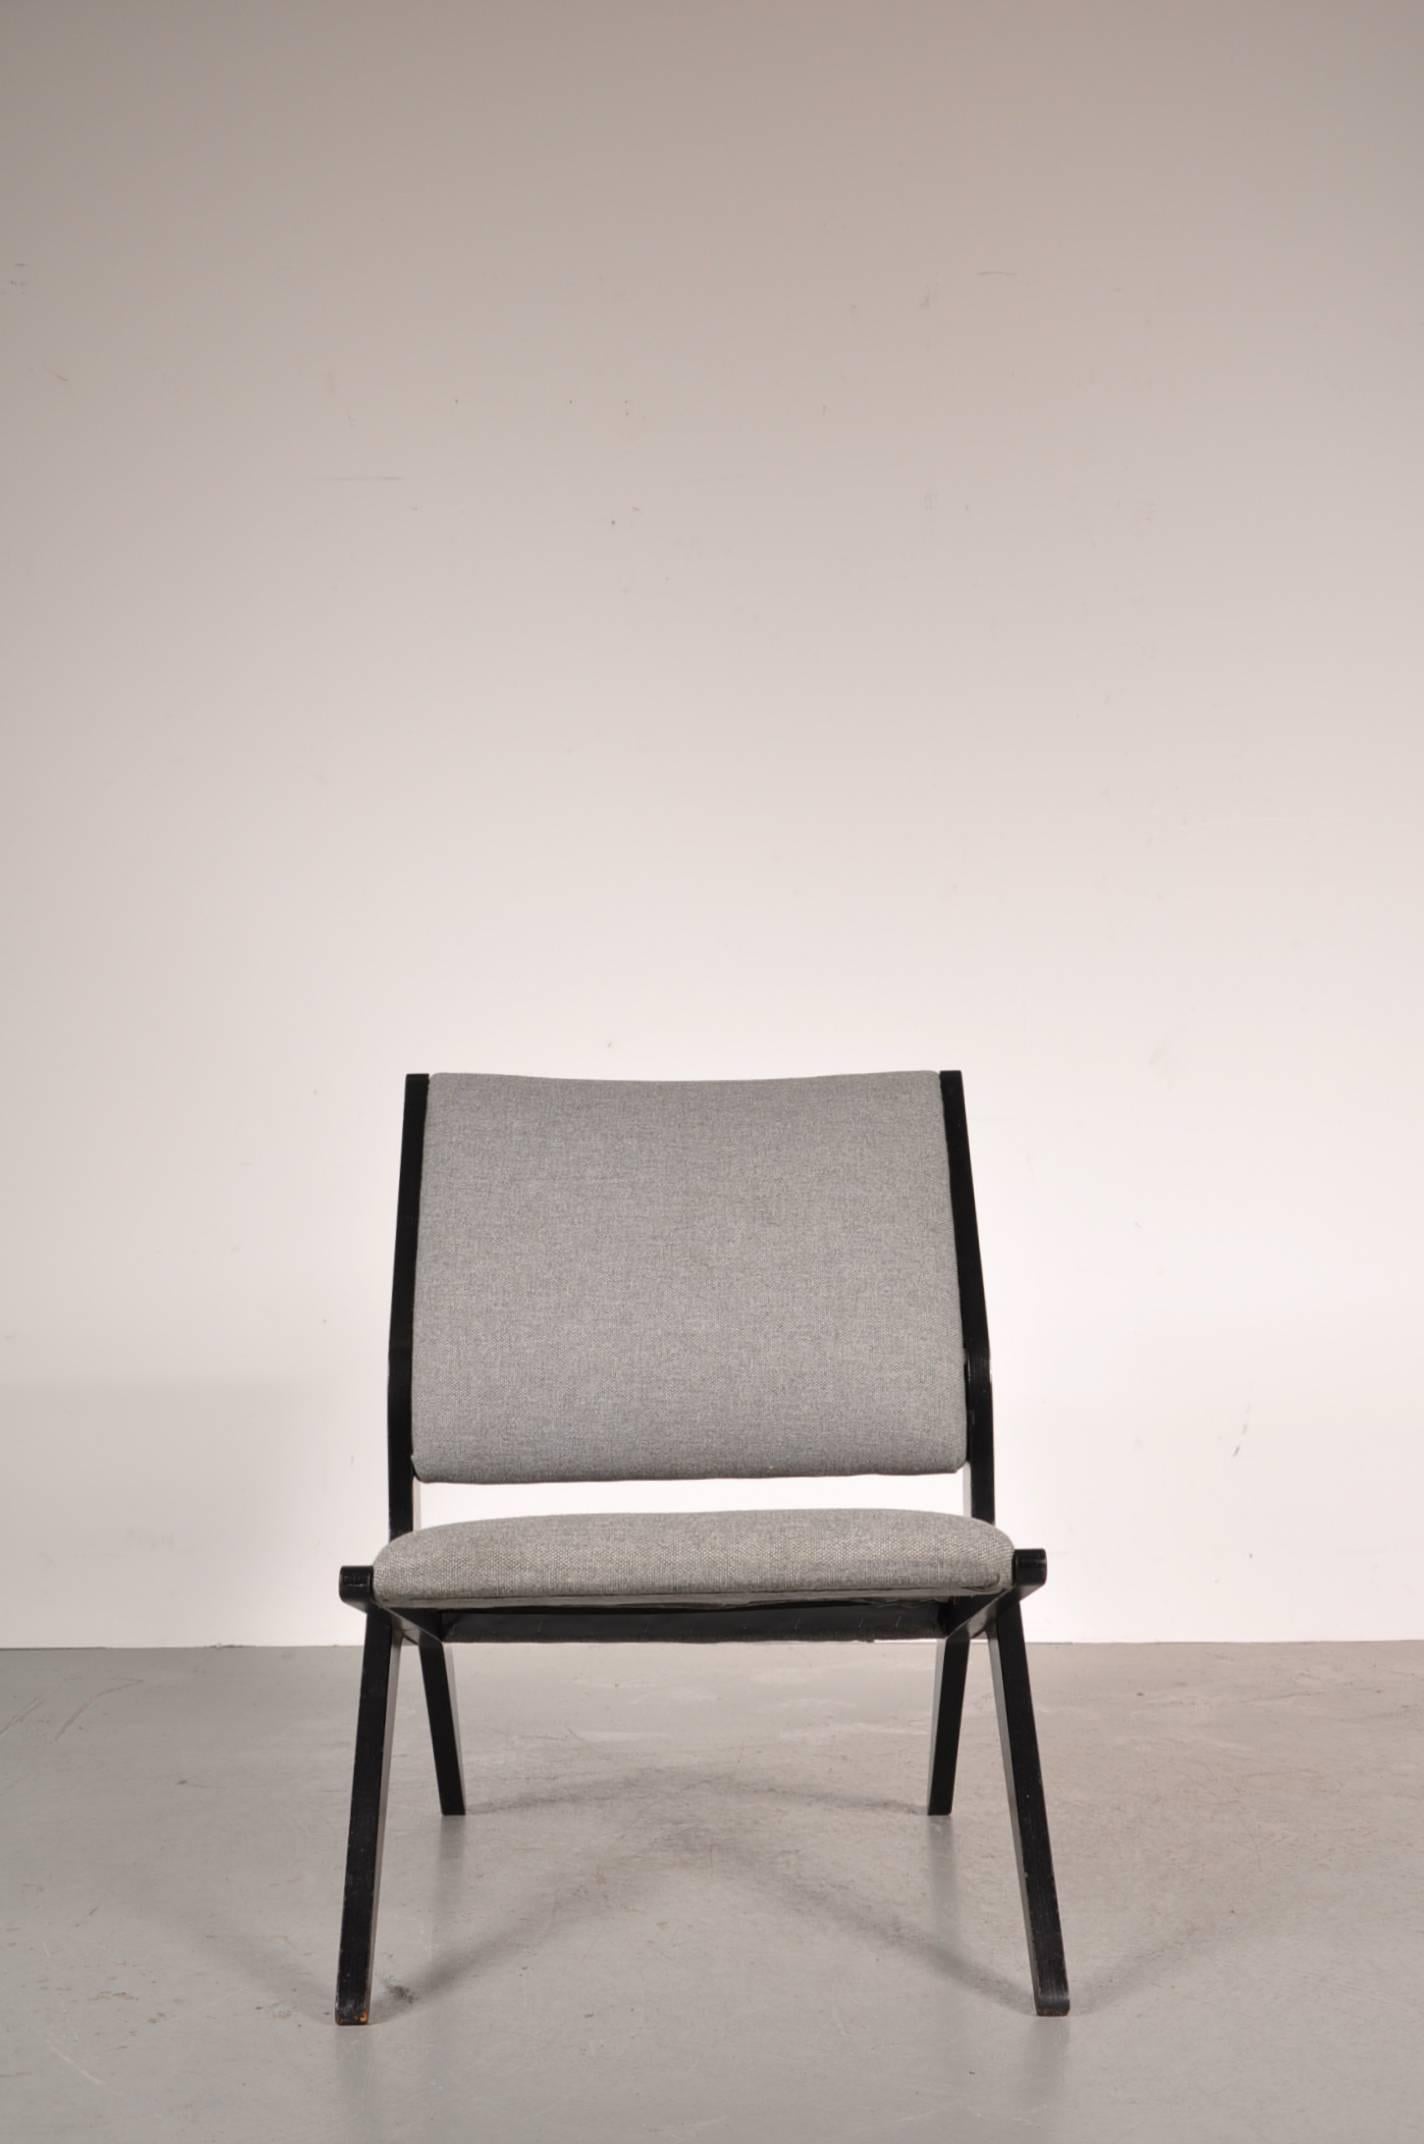 akerblom chair sweden